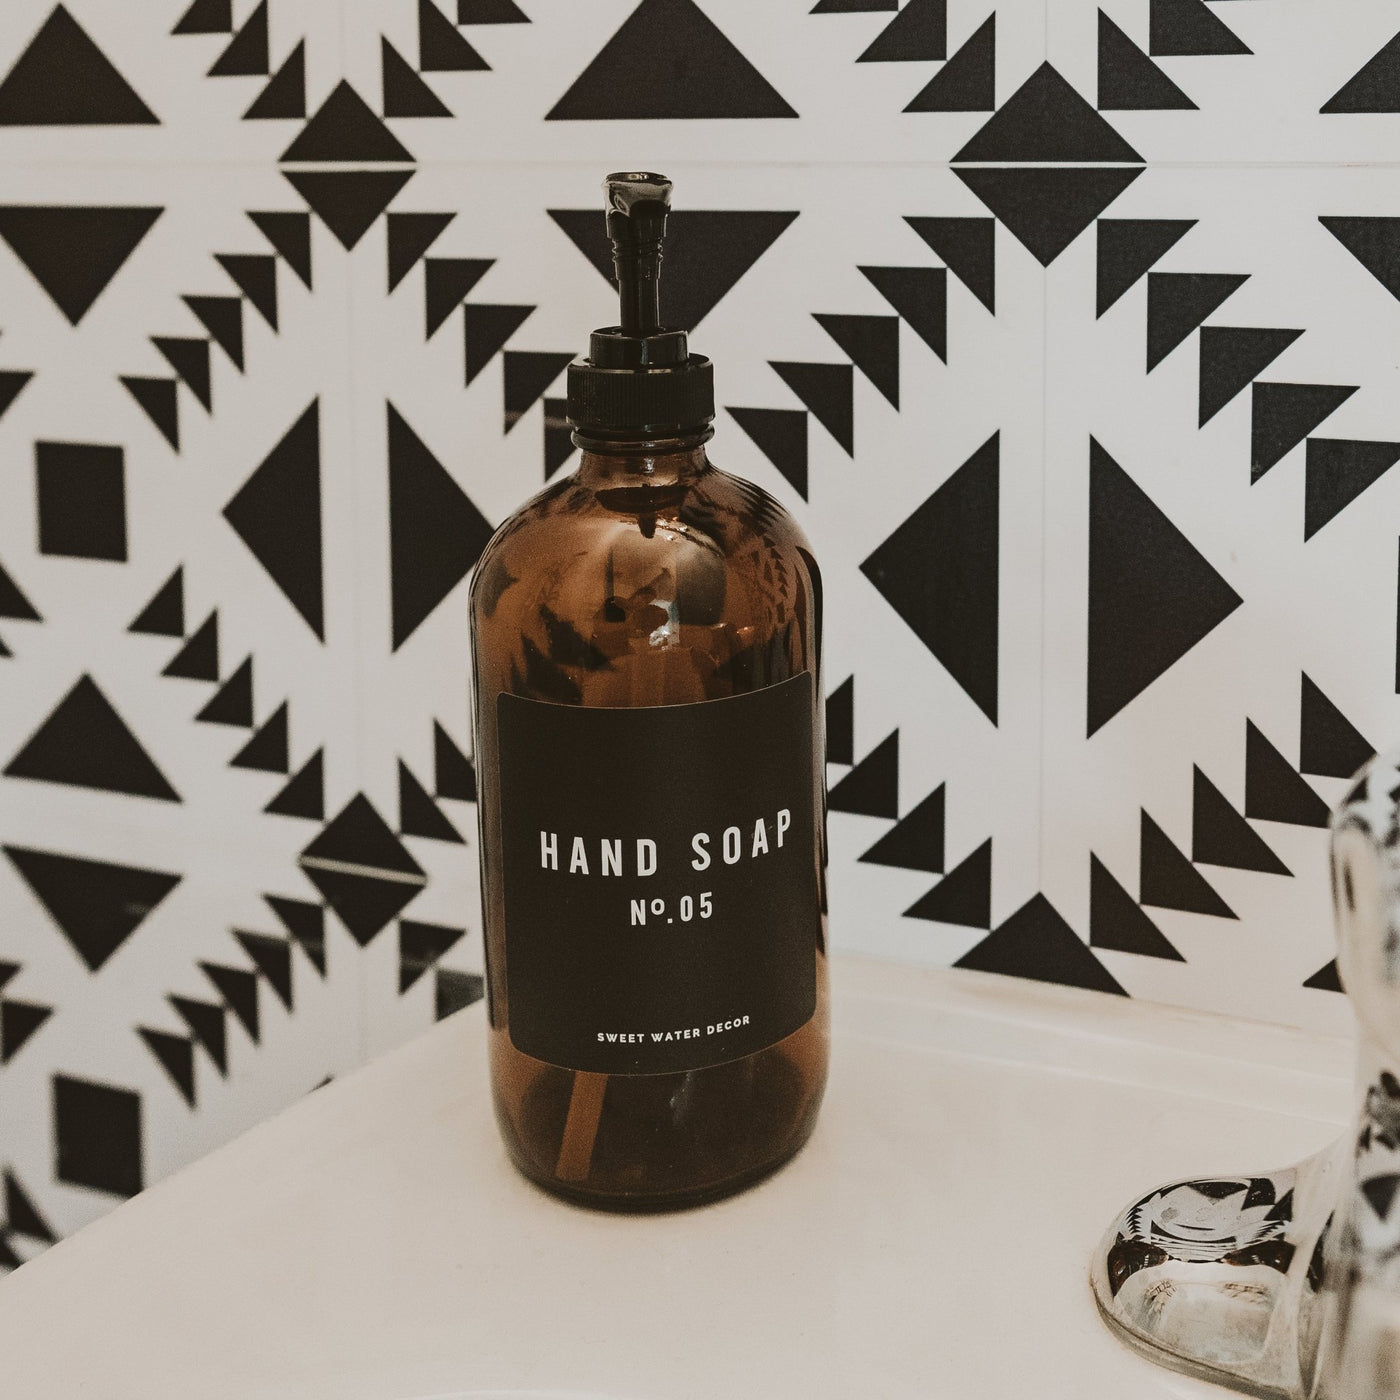 16oz Amber Glass Hand Soap Dispenser - Black Label - Sweet Water Decor - Dispensers